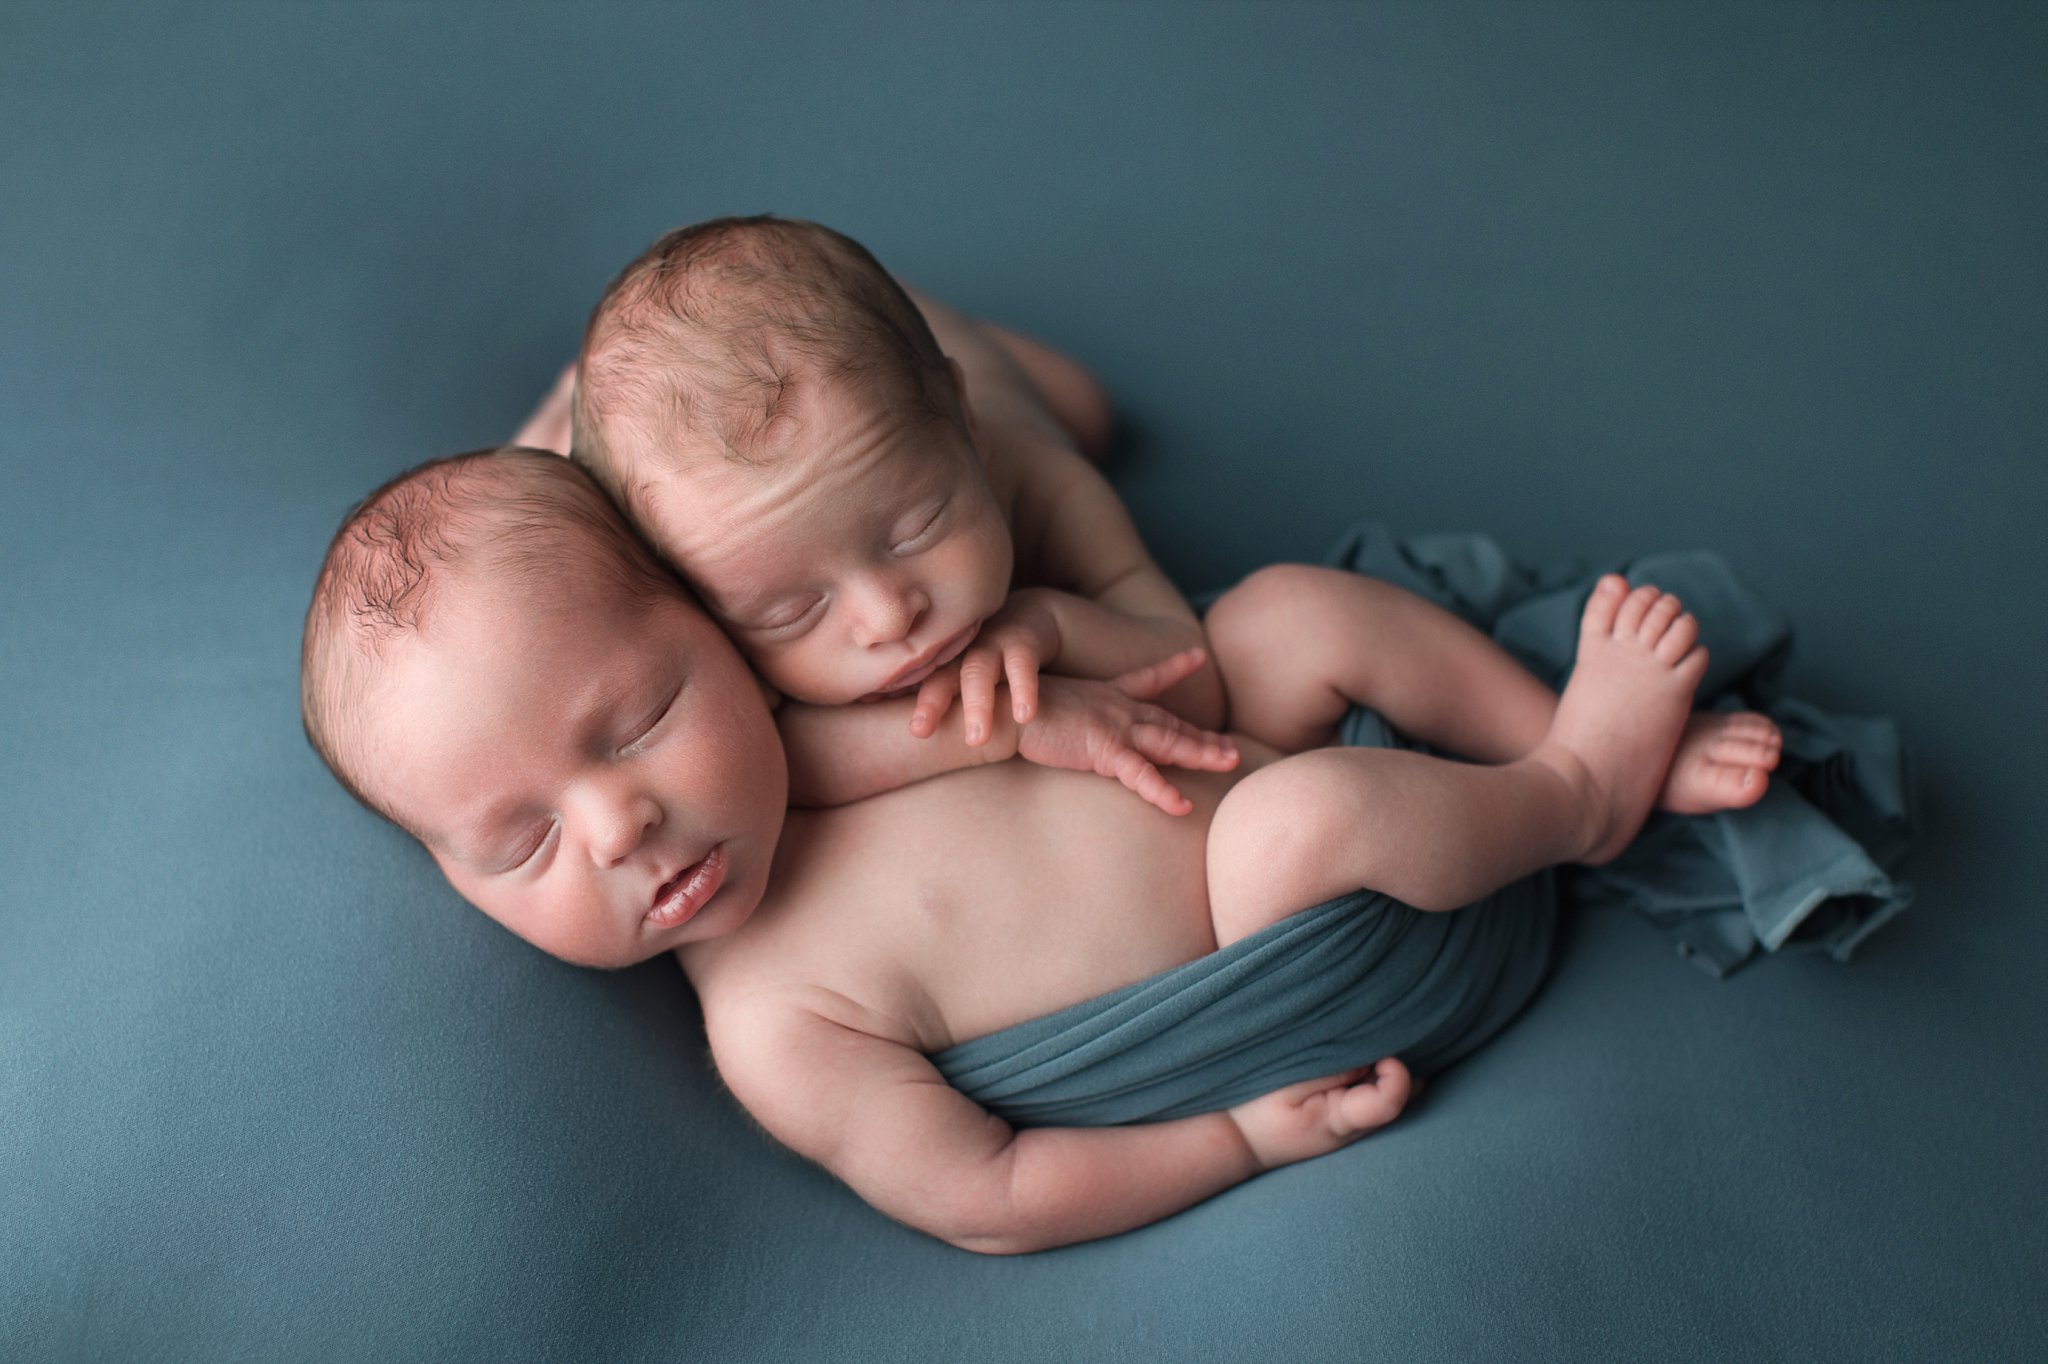 newborn baby boys snuggled and sleeping on teal blanket